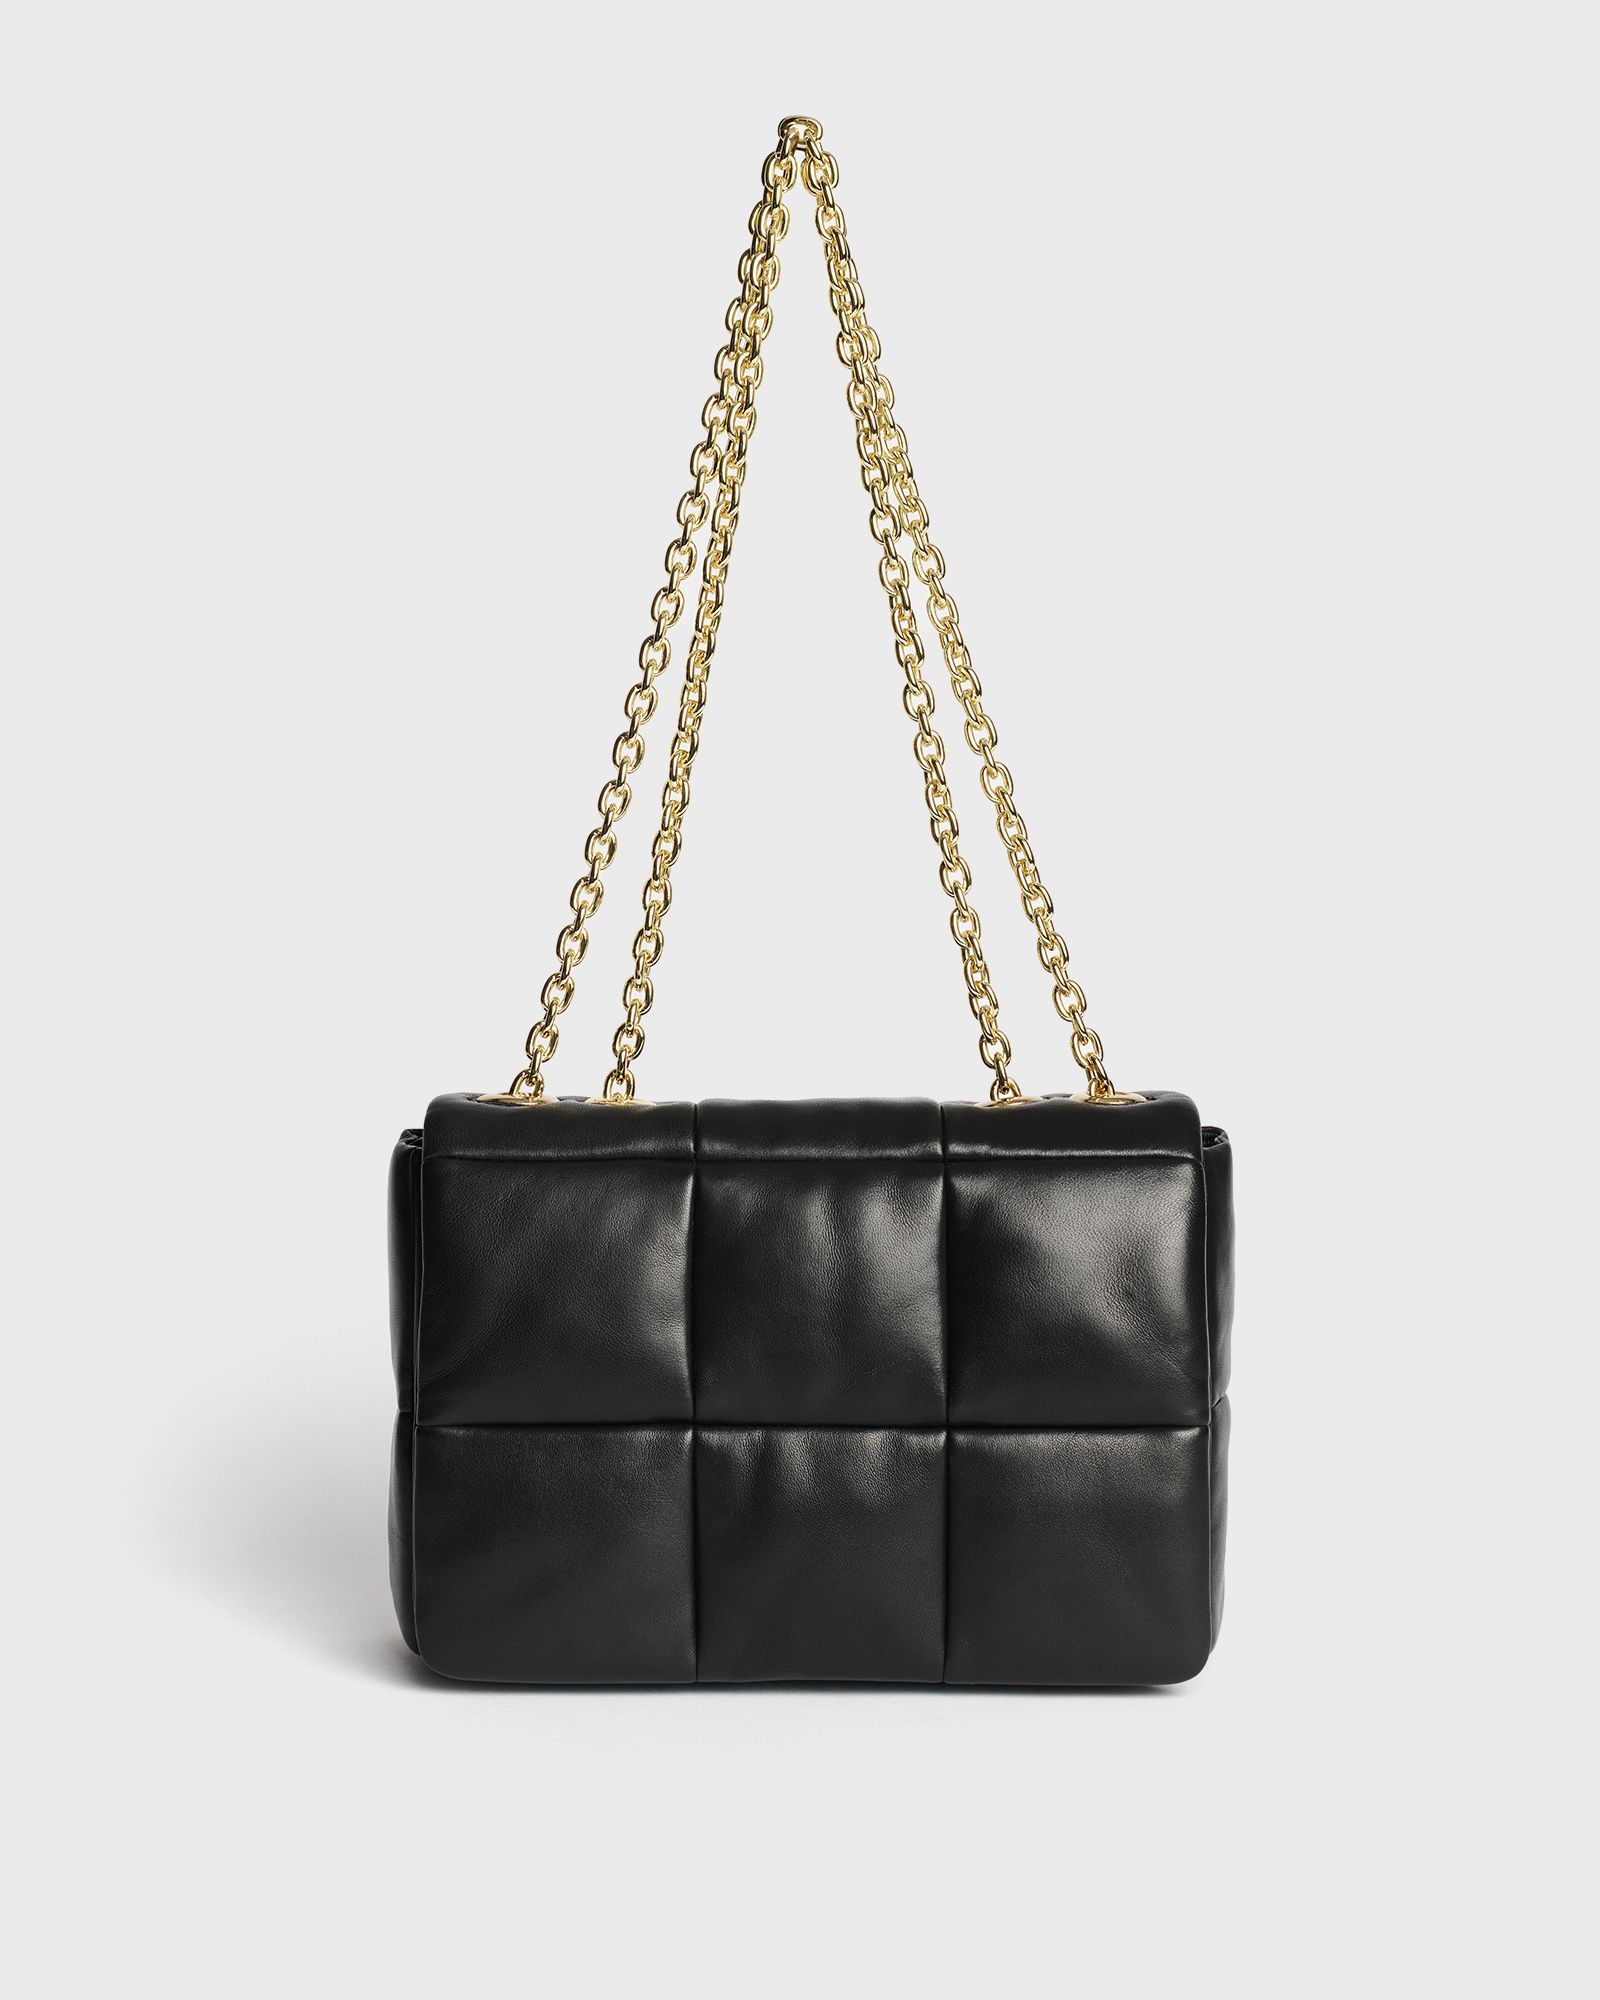 stand studio holly bag women handbags